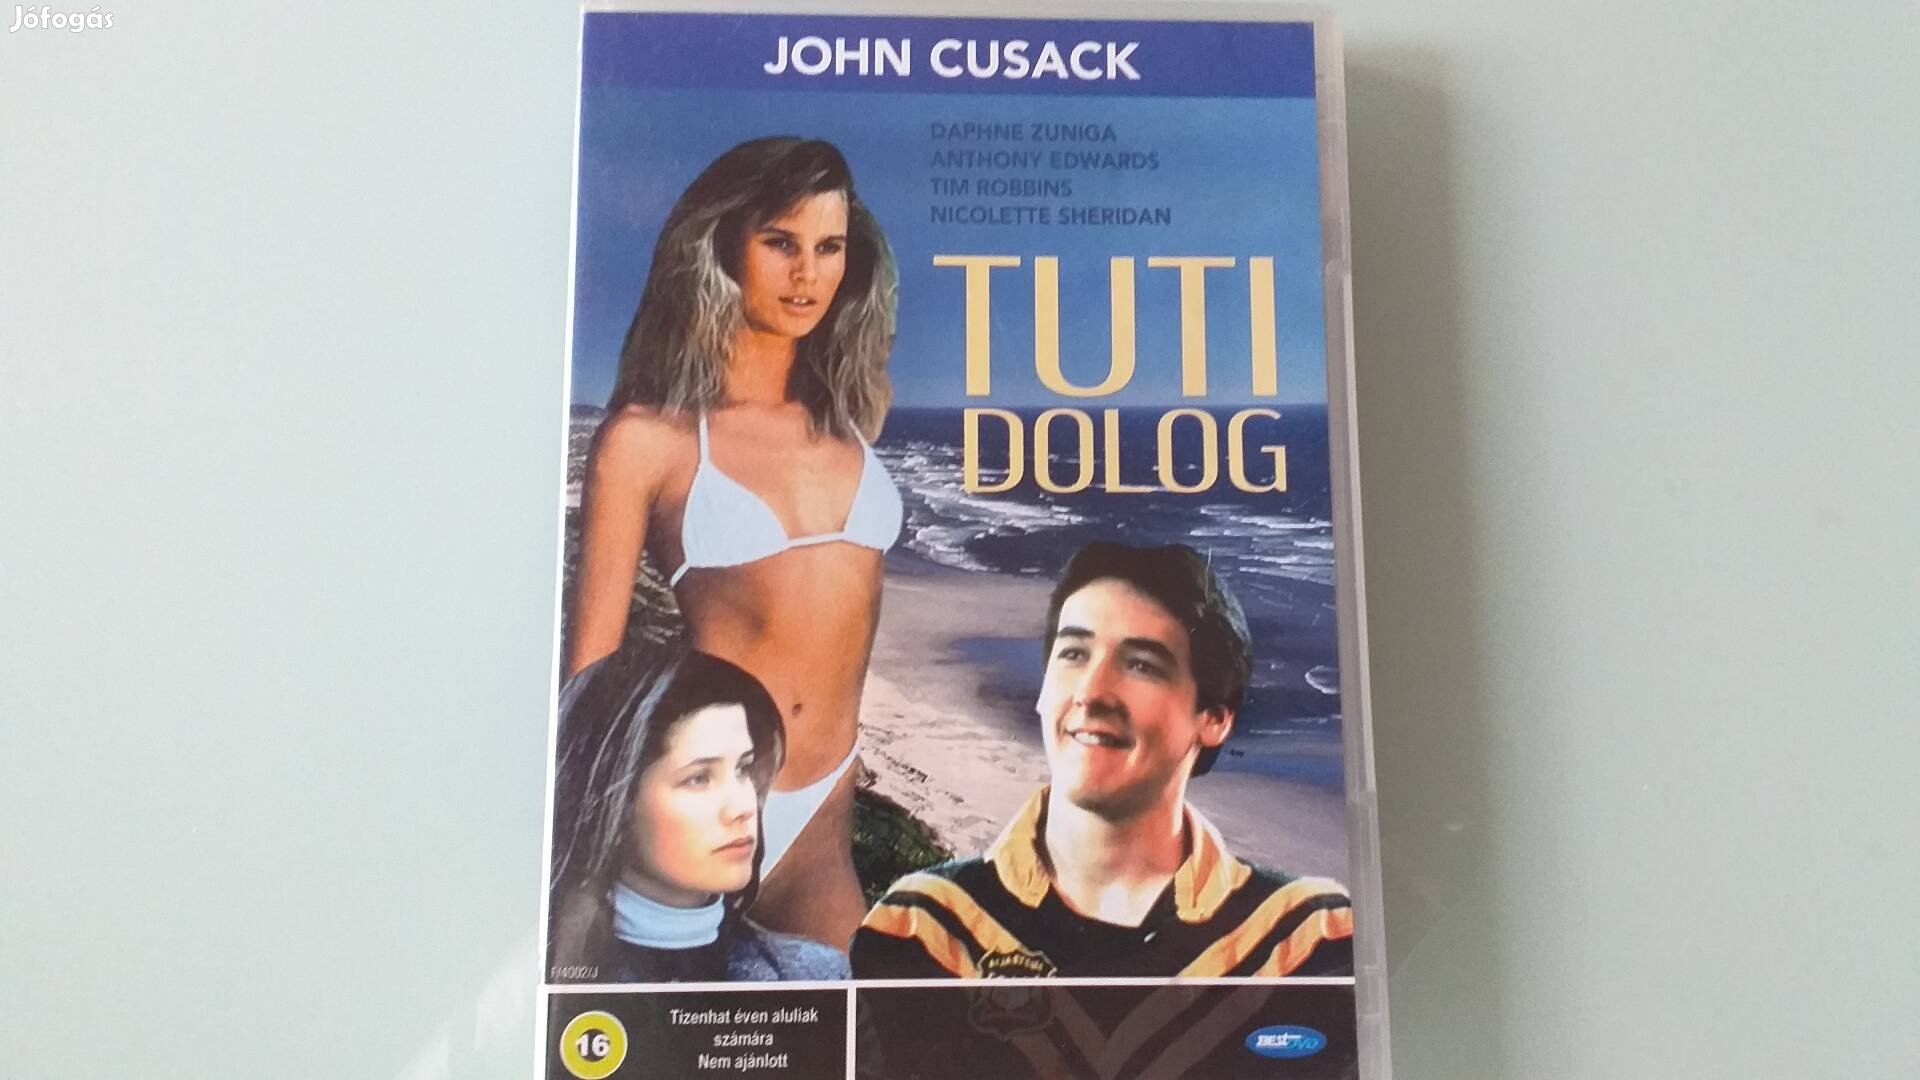 Tuti dolog romantik vígjáték DVD-John Cusack